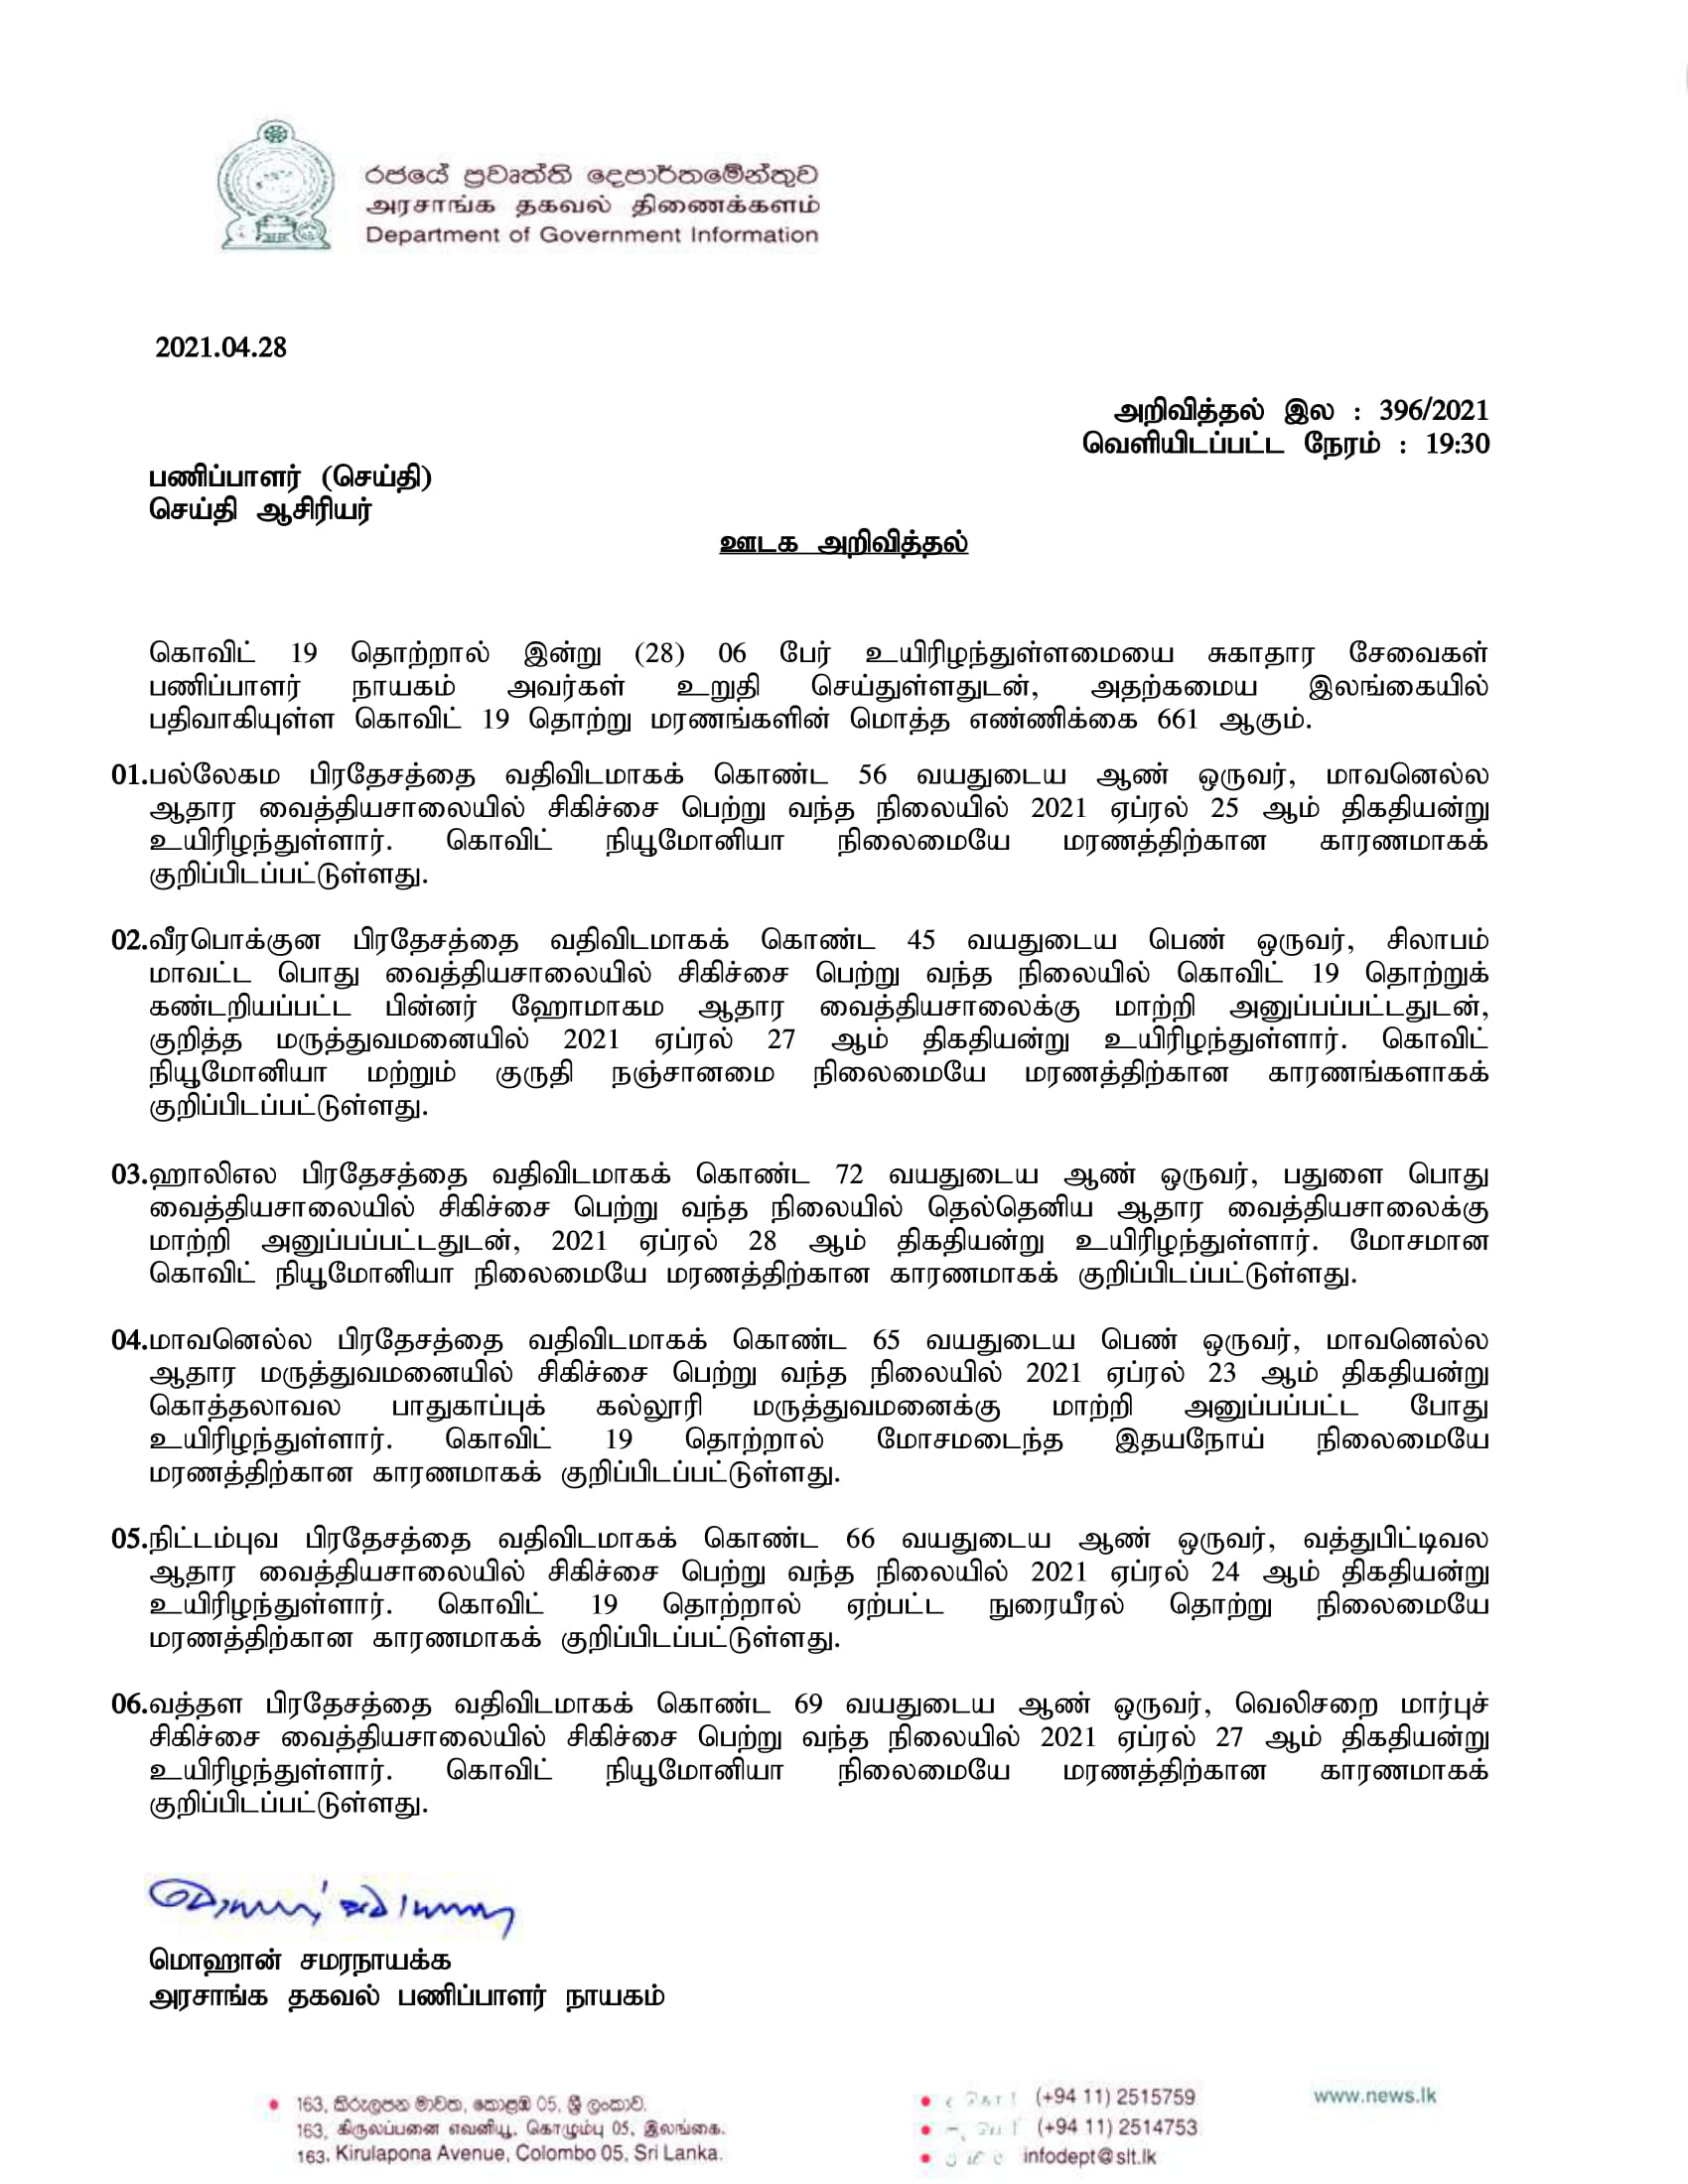 Release No 396 Tamil 1